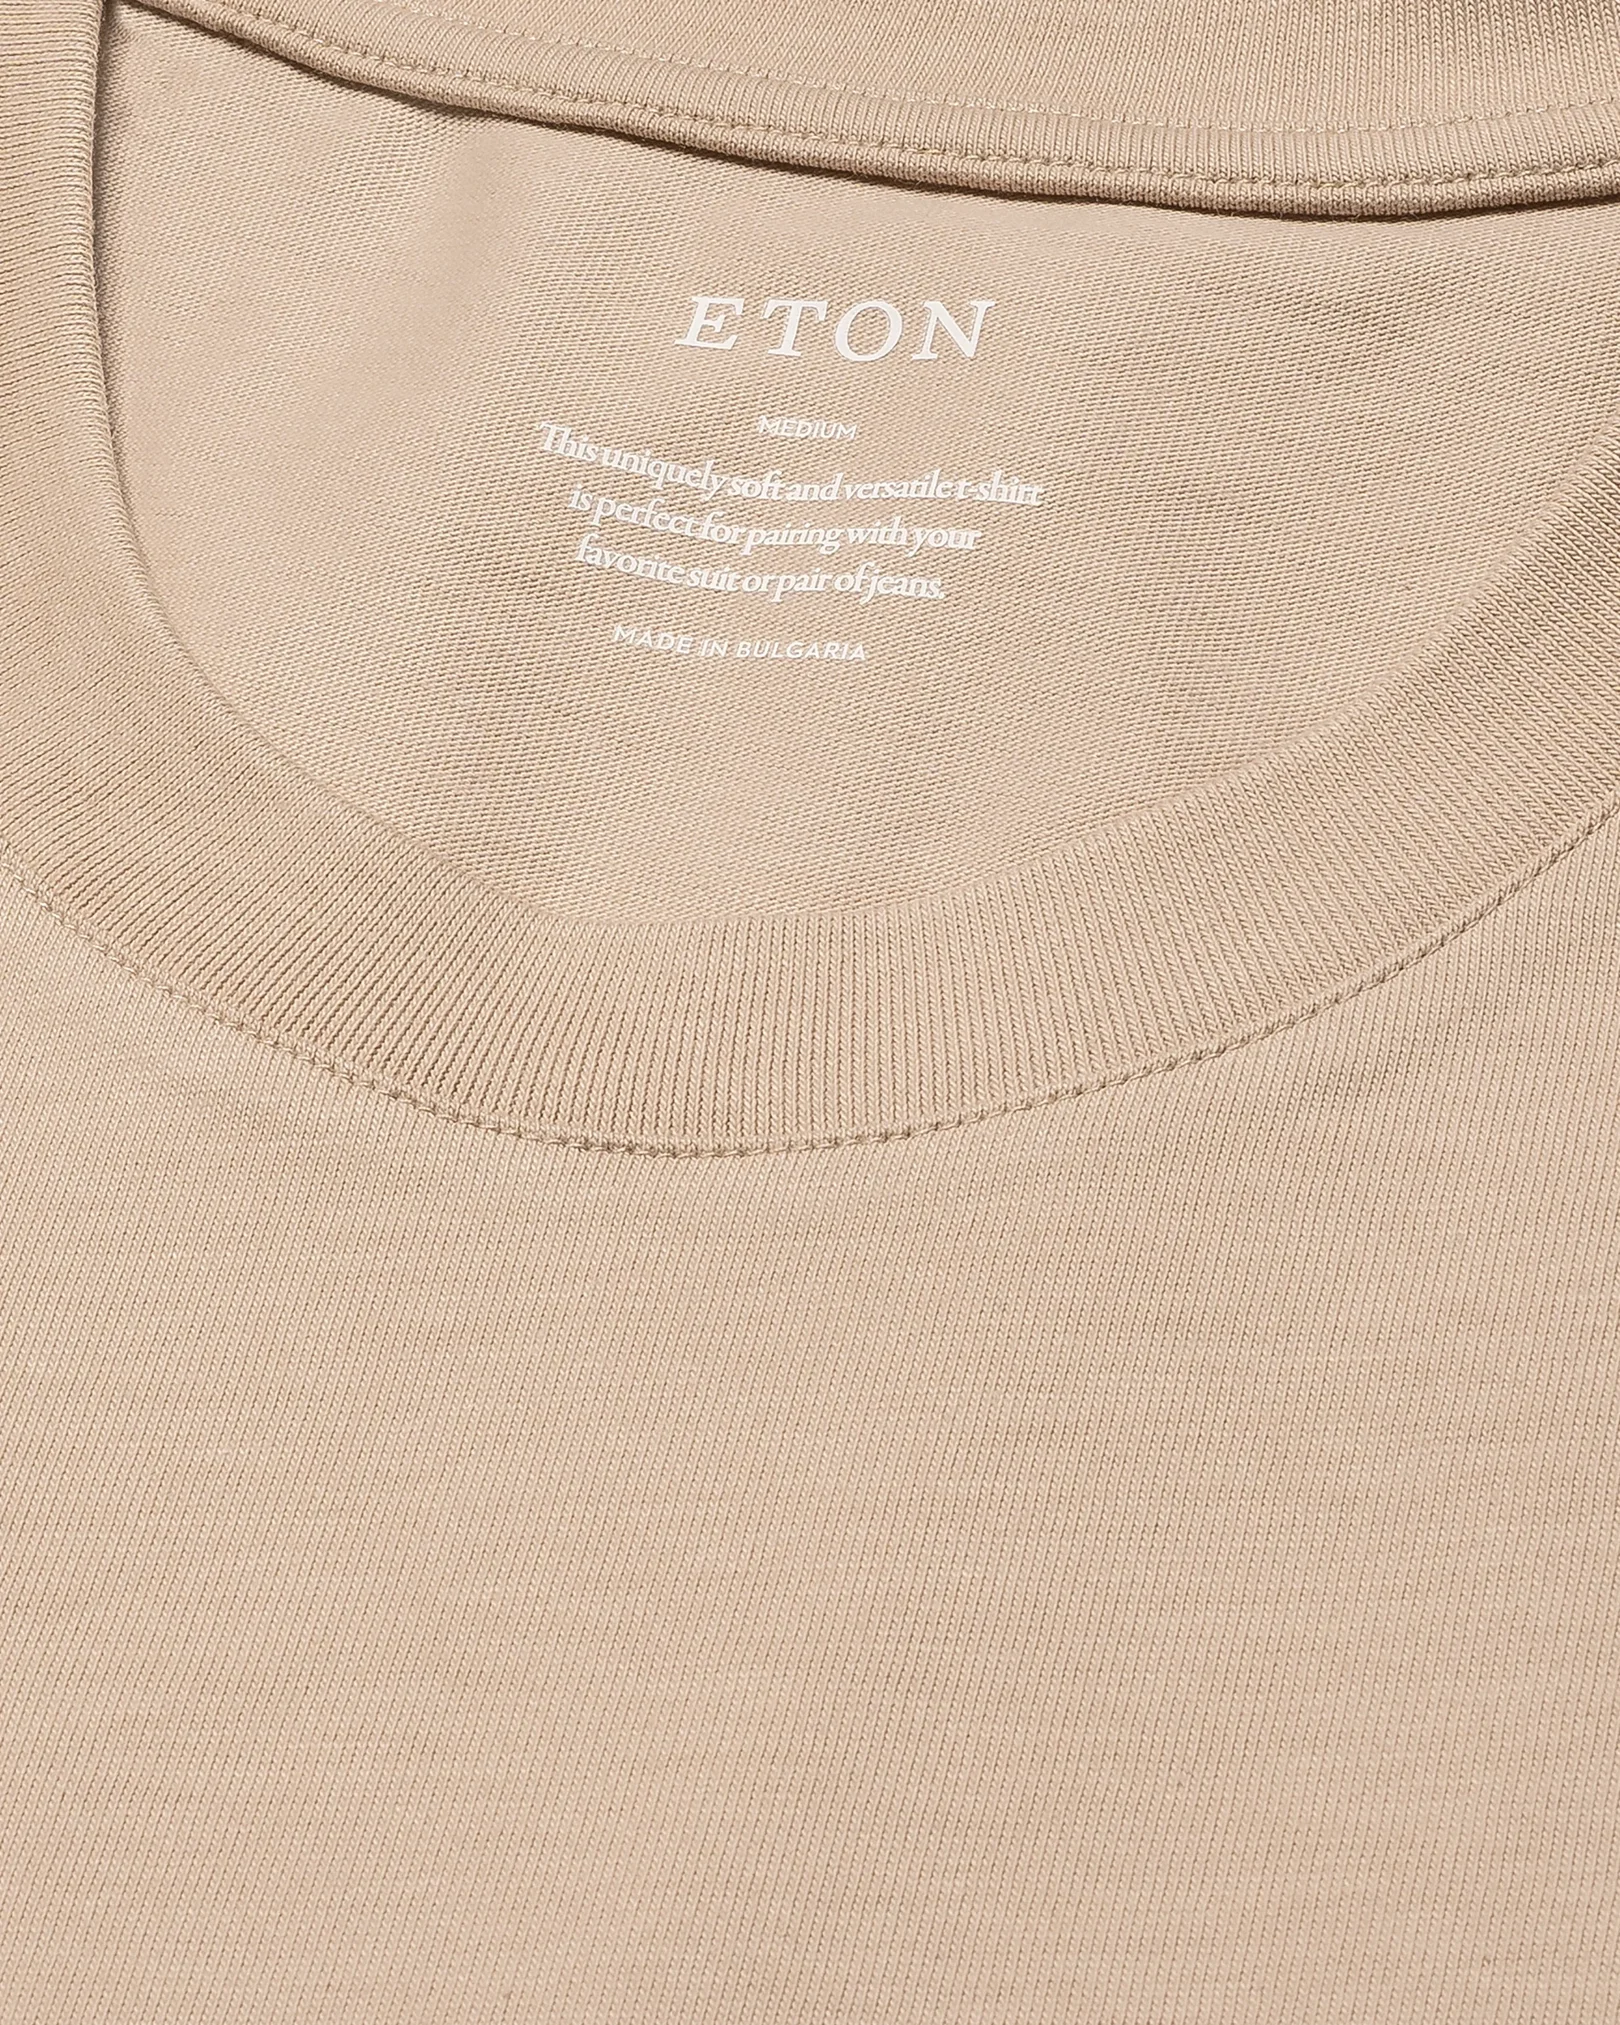 Eton - T-shirt marron clair en coton Supima